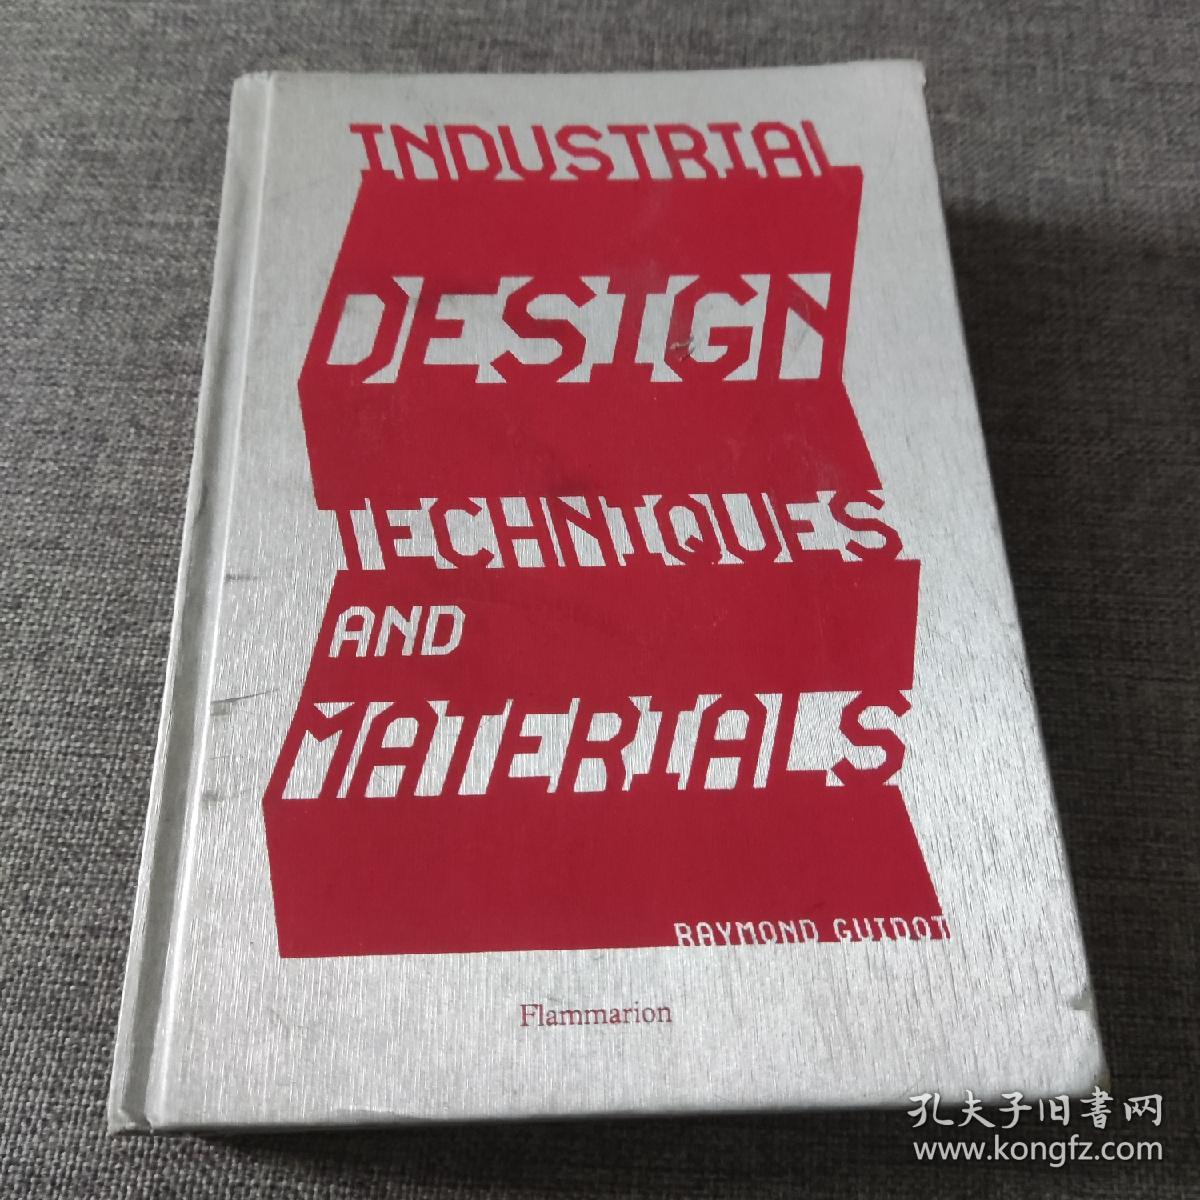 industrial design techniques and materials